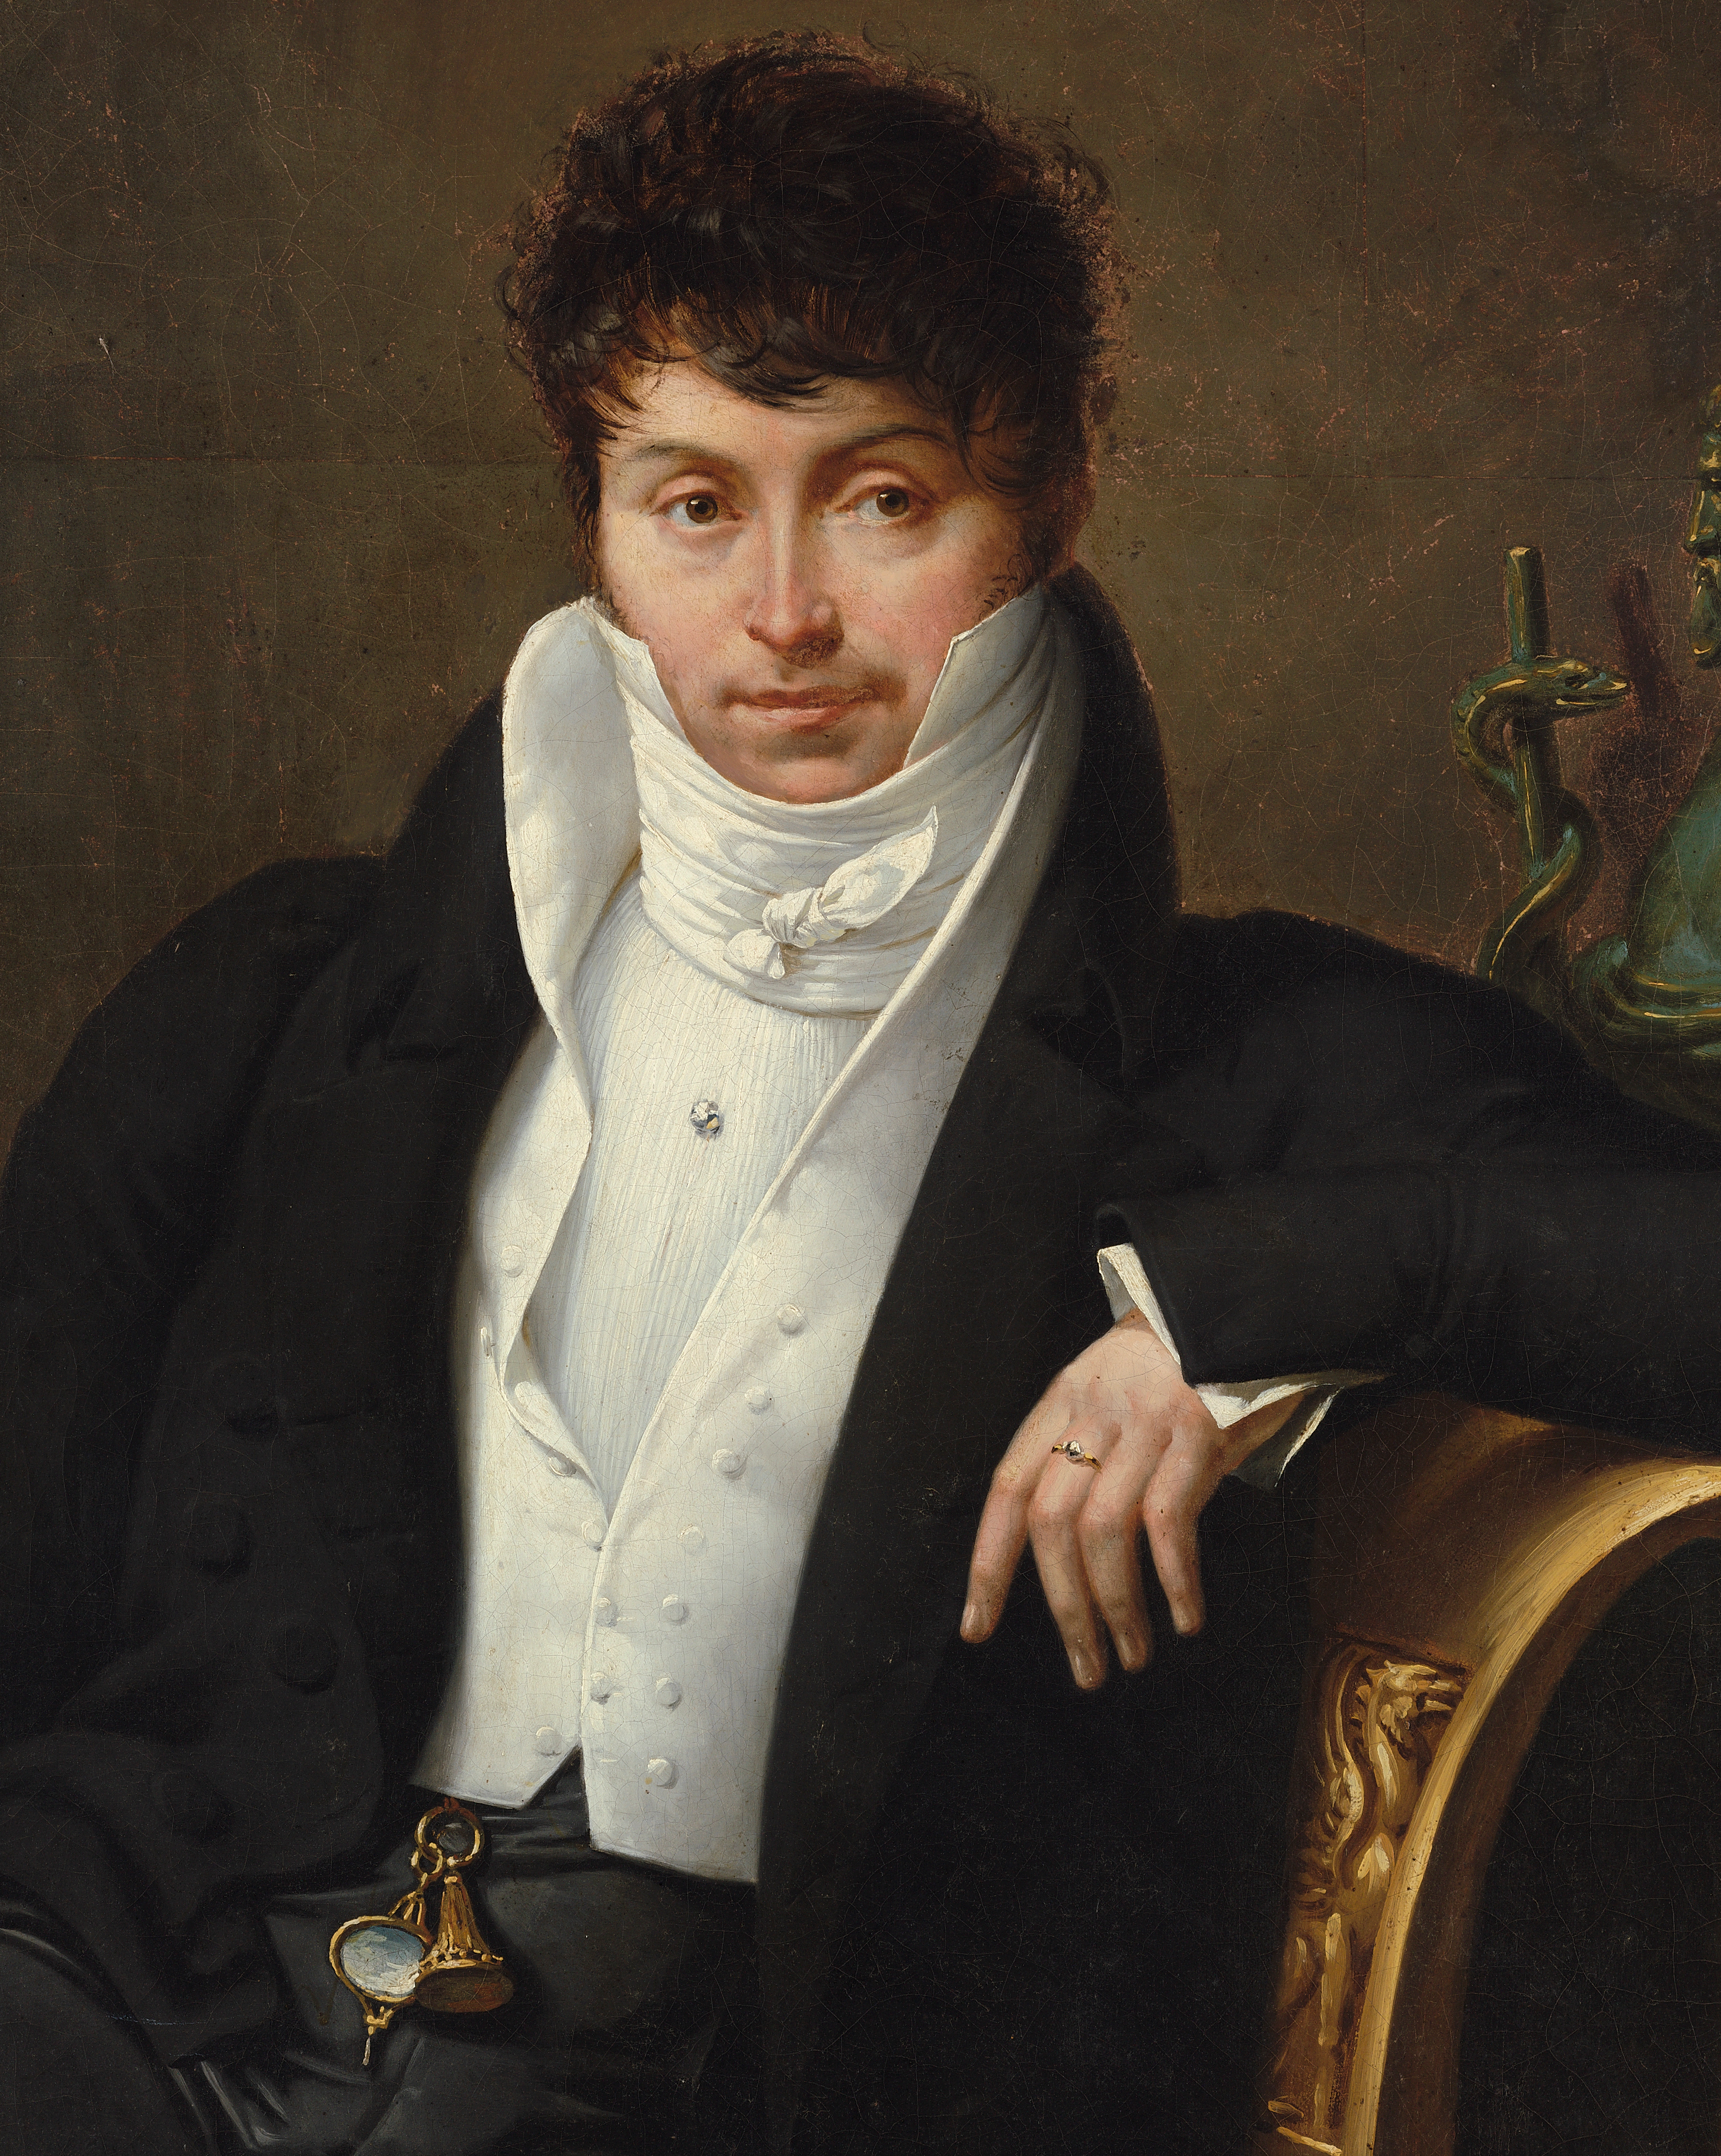 Portrait of Pierre-Jean-George Cabanis by Merry-Joseph Blondel, ca 1808.